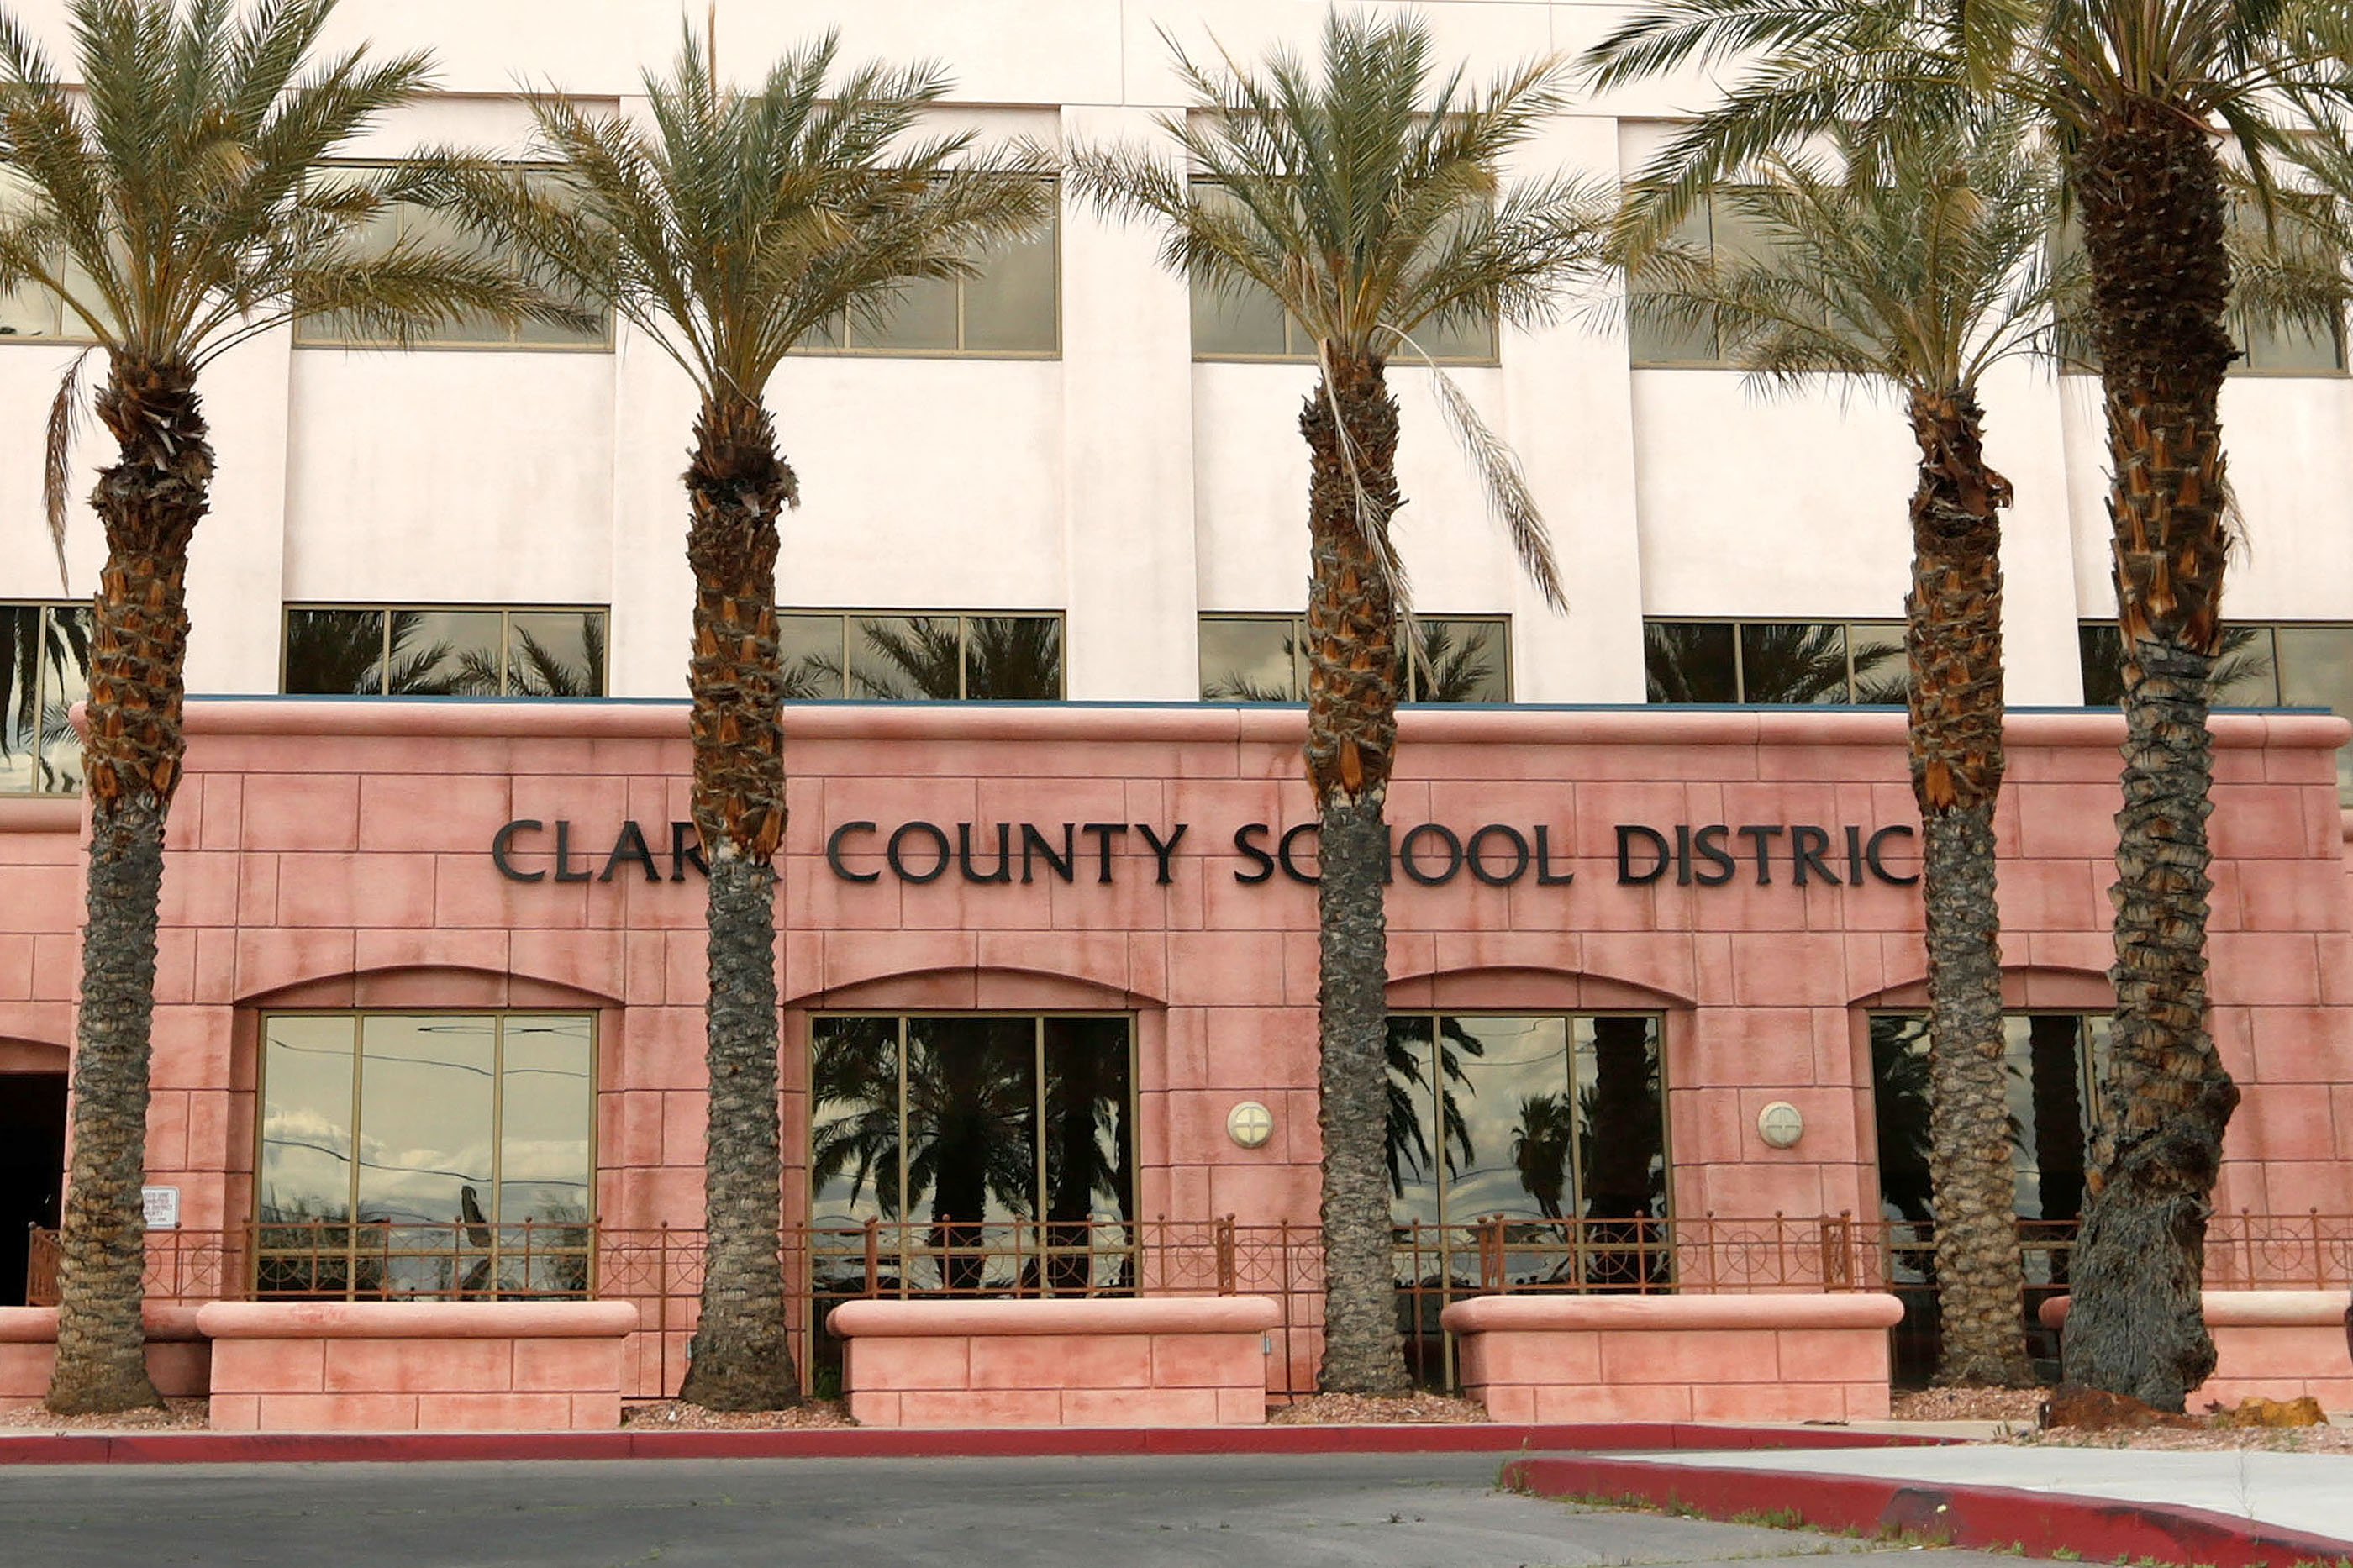 Clark County School District melonggarkan aturan karantina COVID